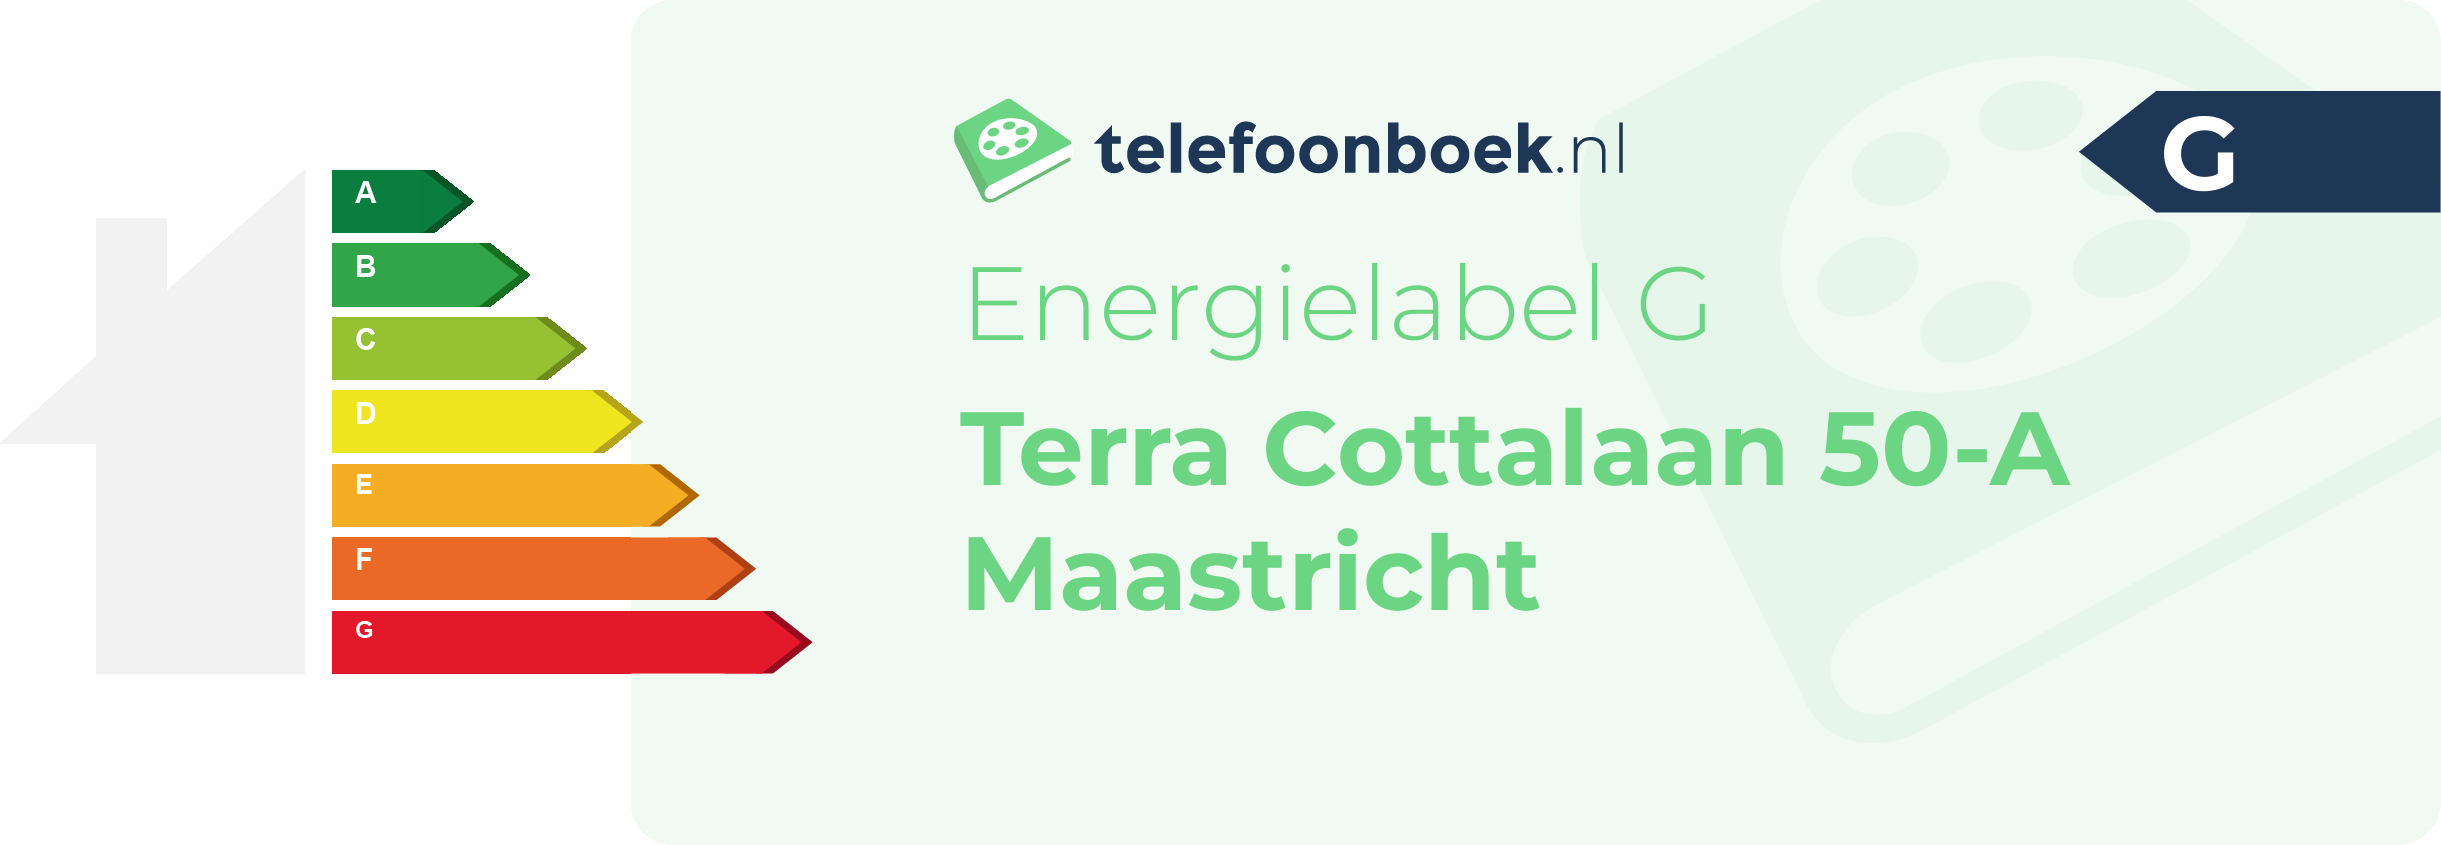 Energielabel Terra Cottalaan 50-A Maastricht